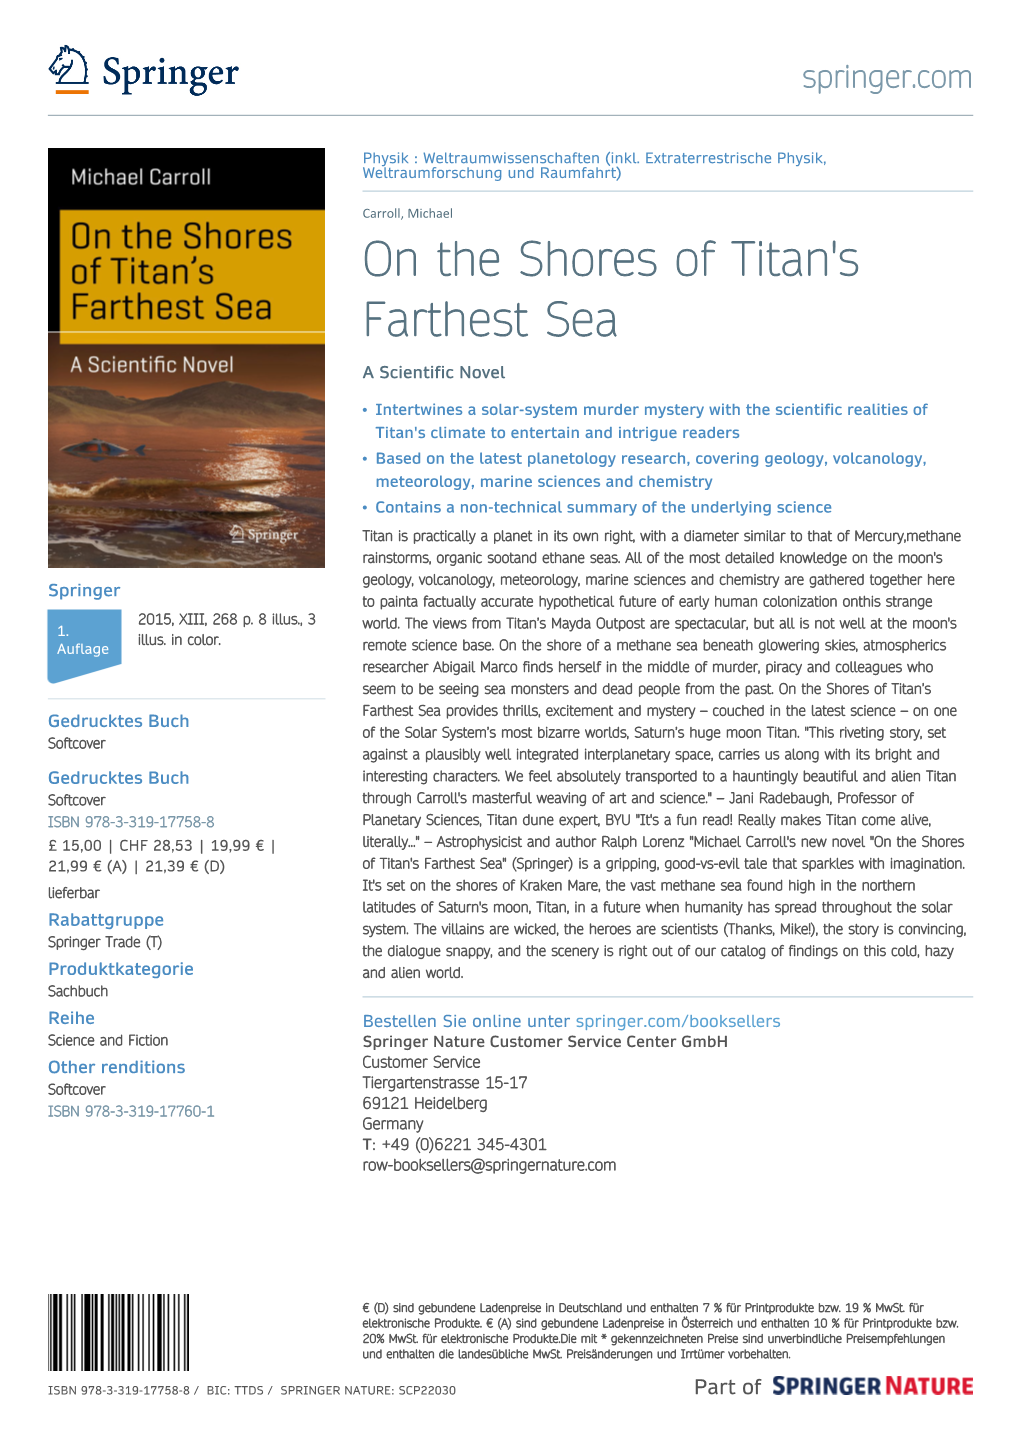 On the Shores of Titan's Farthest Sea a Scientific Novel